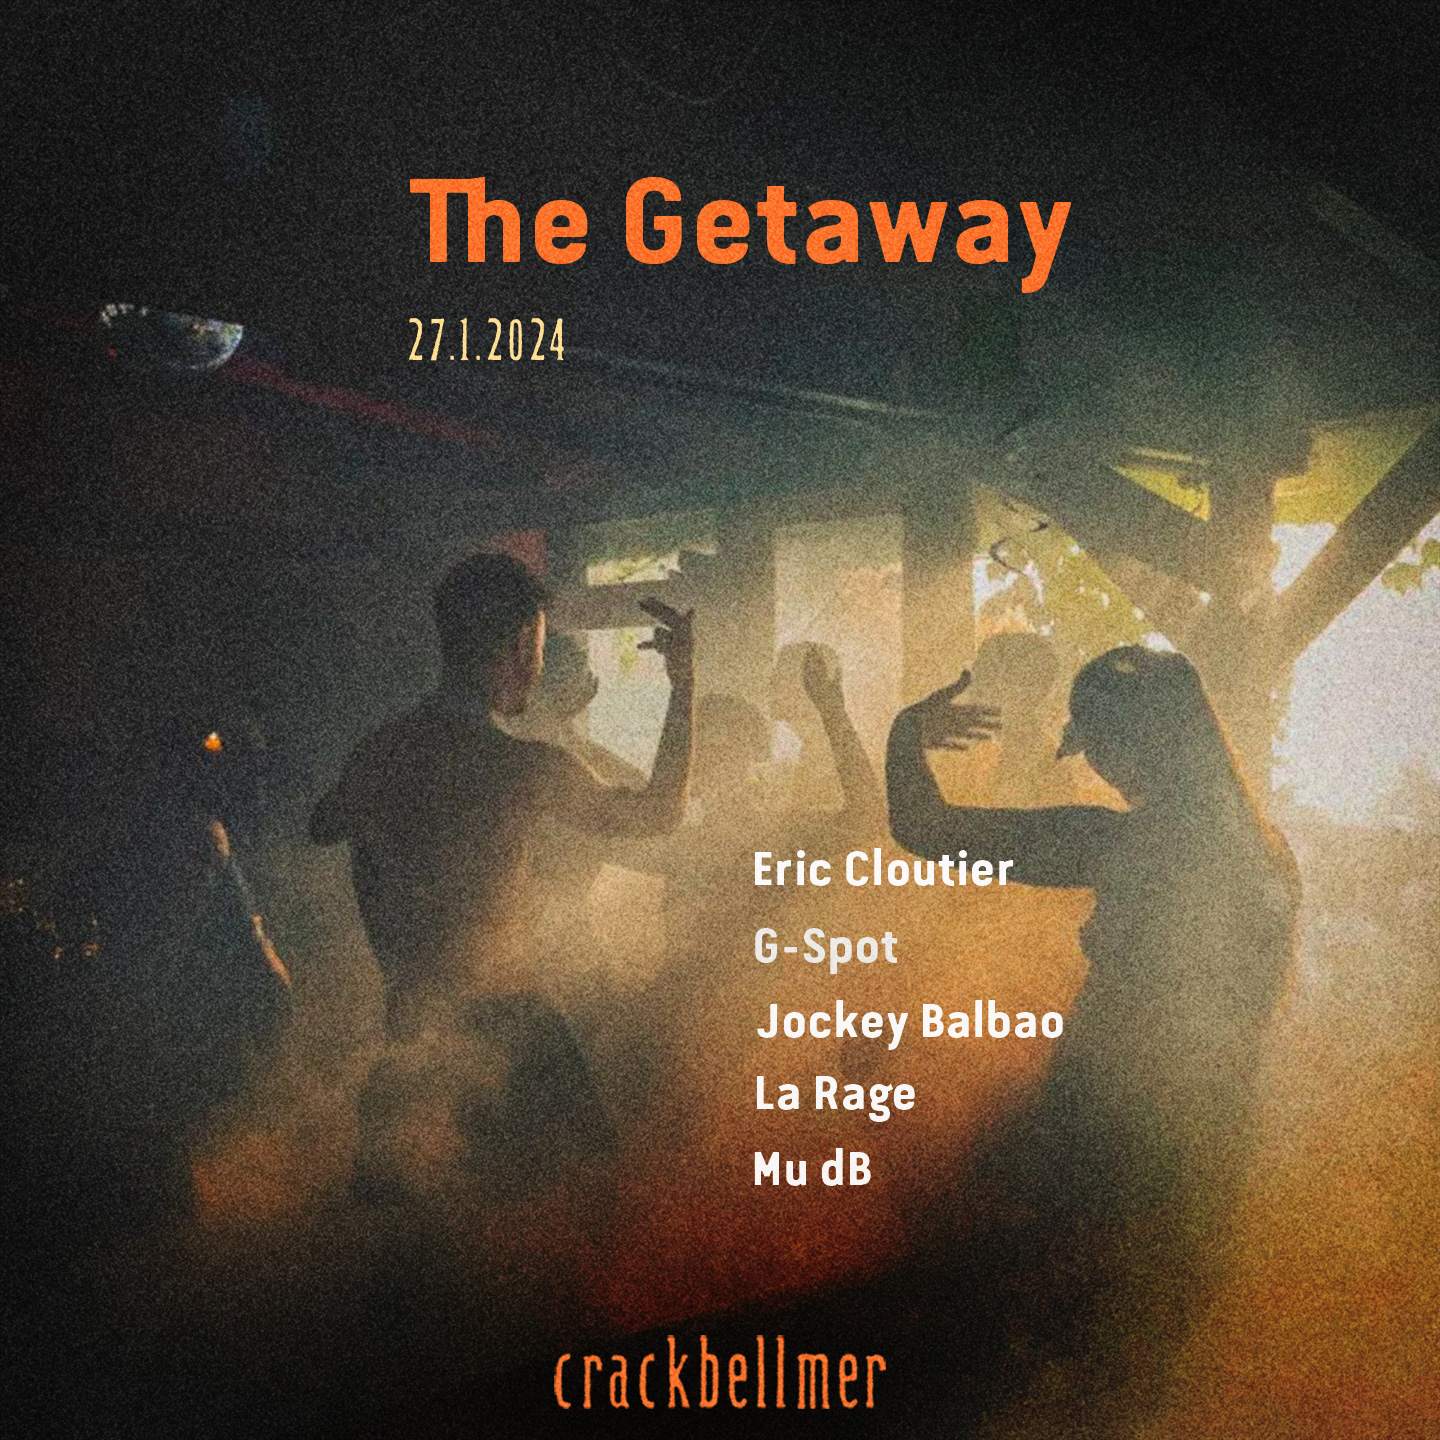 The Getaway with Eric Cloutier, G-Spot, Mu dB, Jockey Balboa, La Rage - フライヤー裏